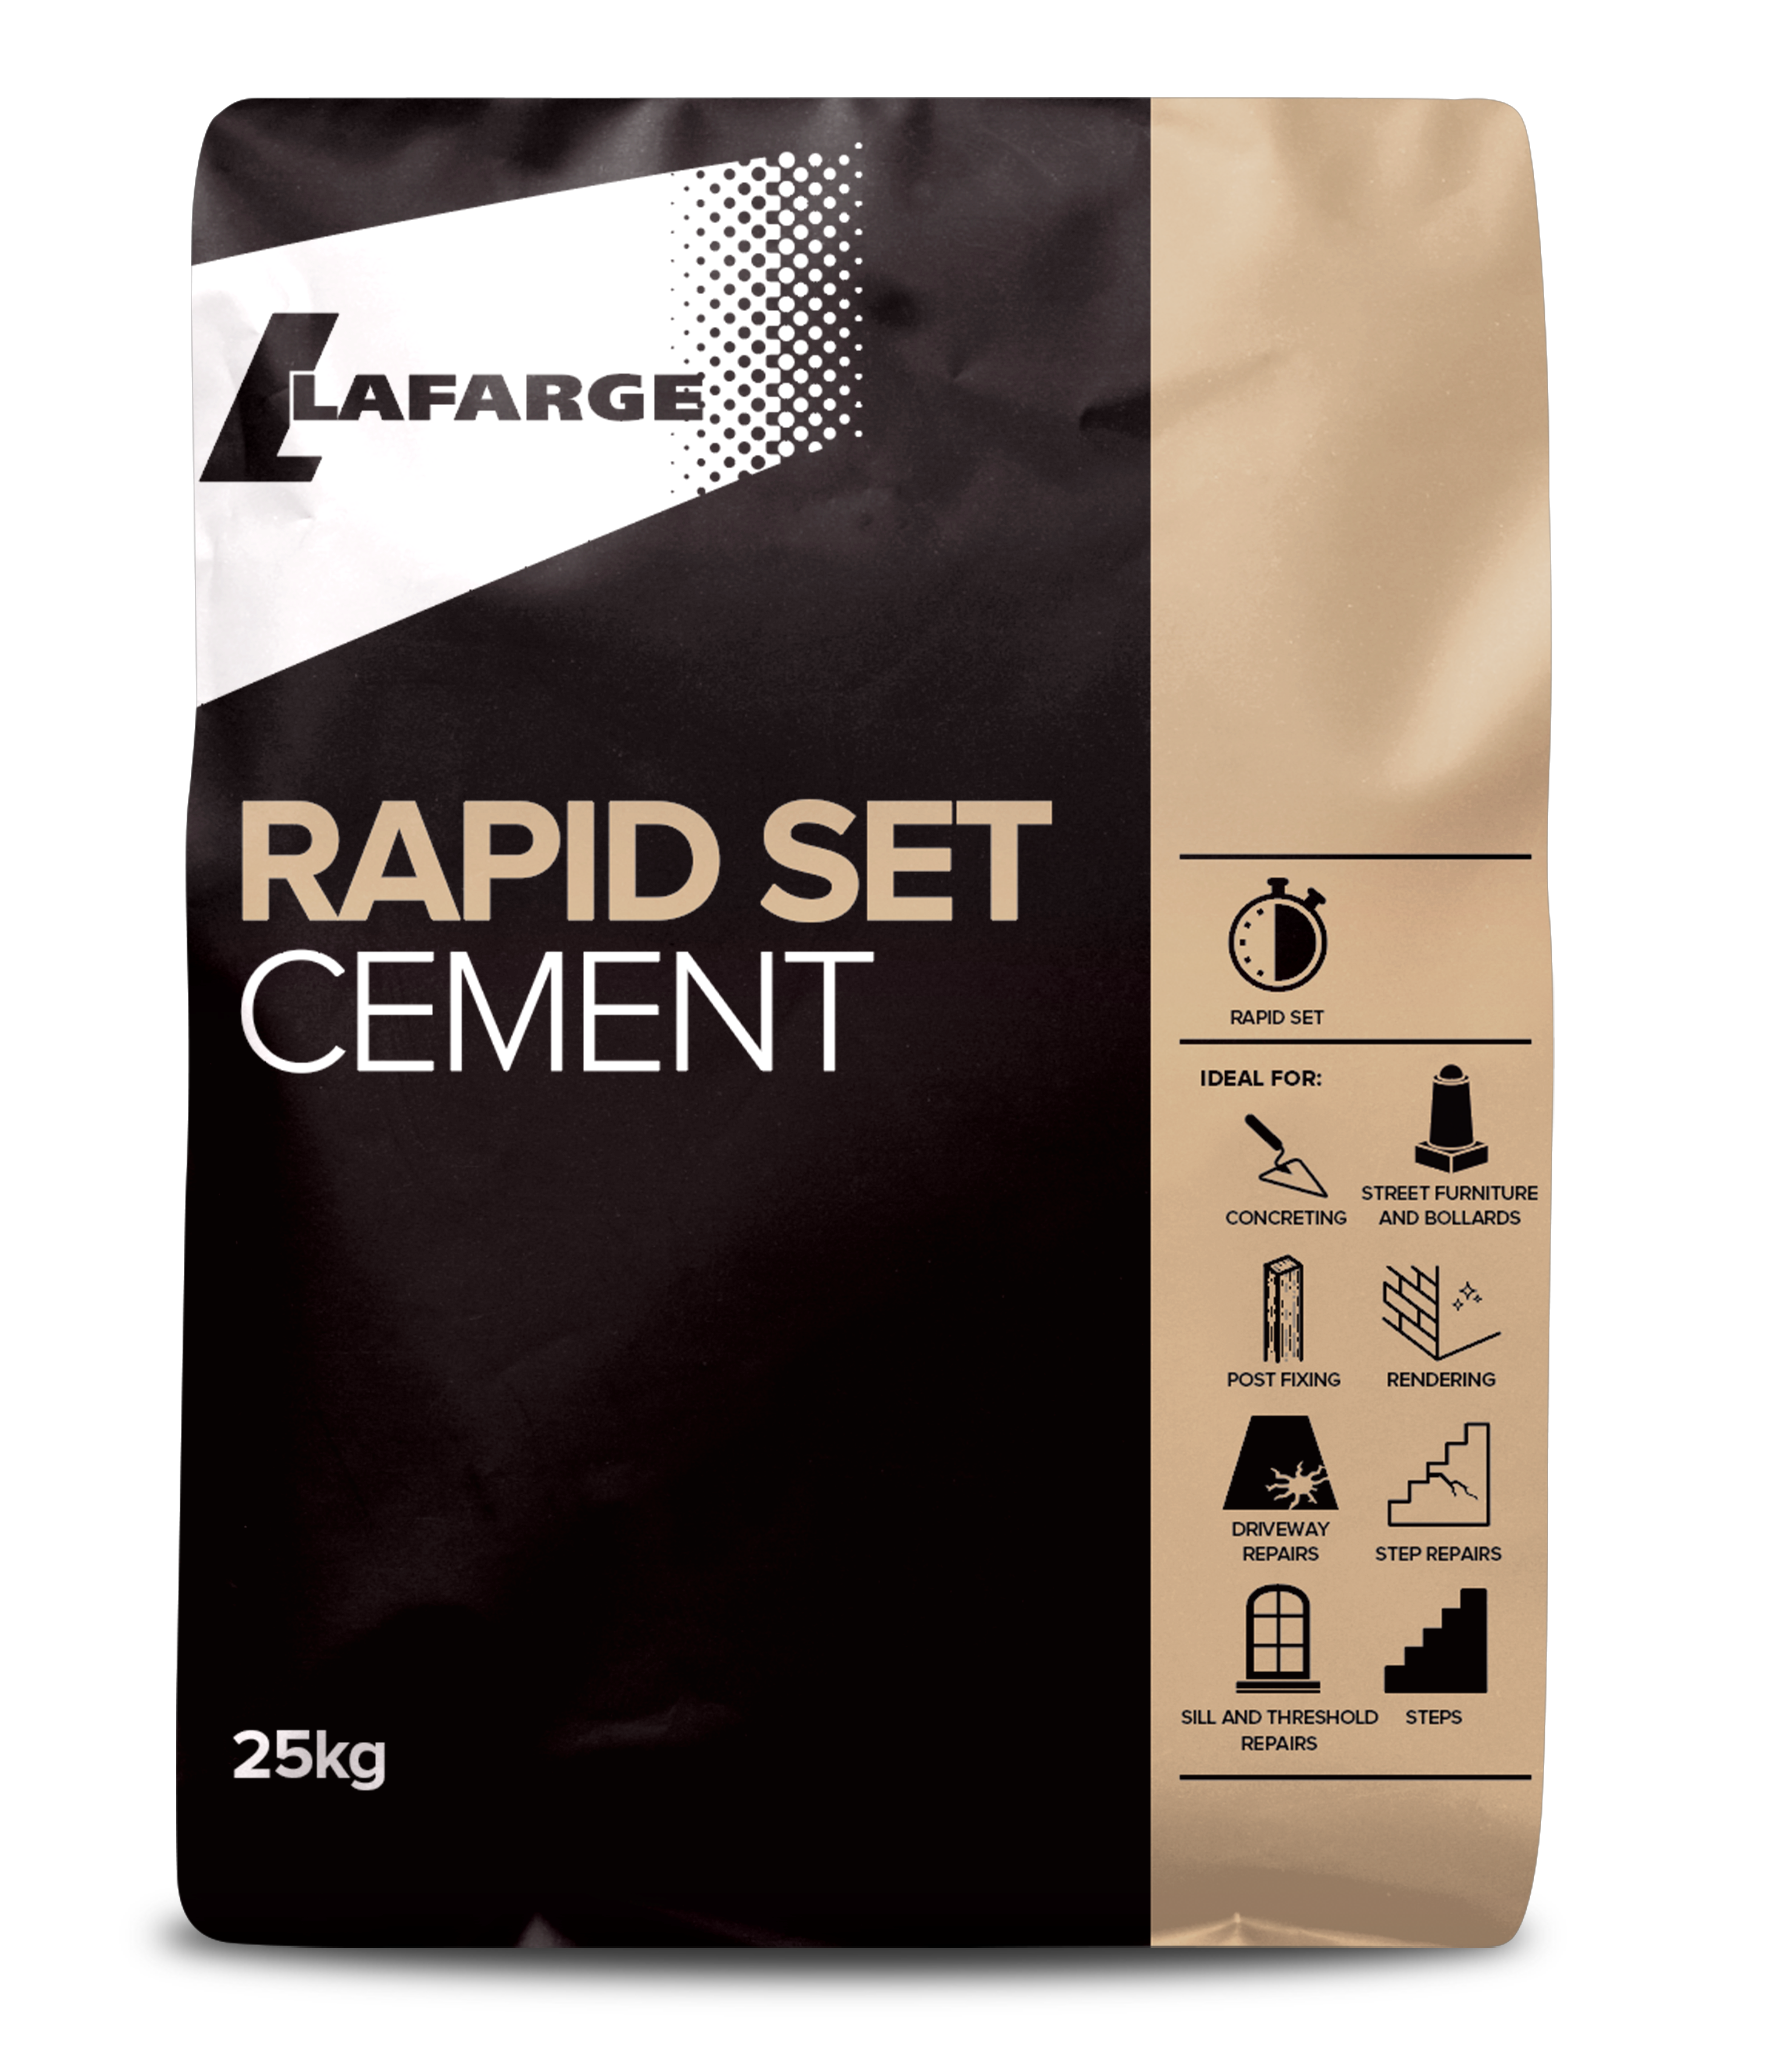 Lafarge Cement introduce new Rapid Set Cement